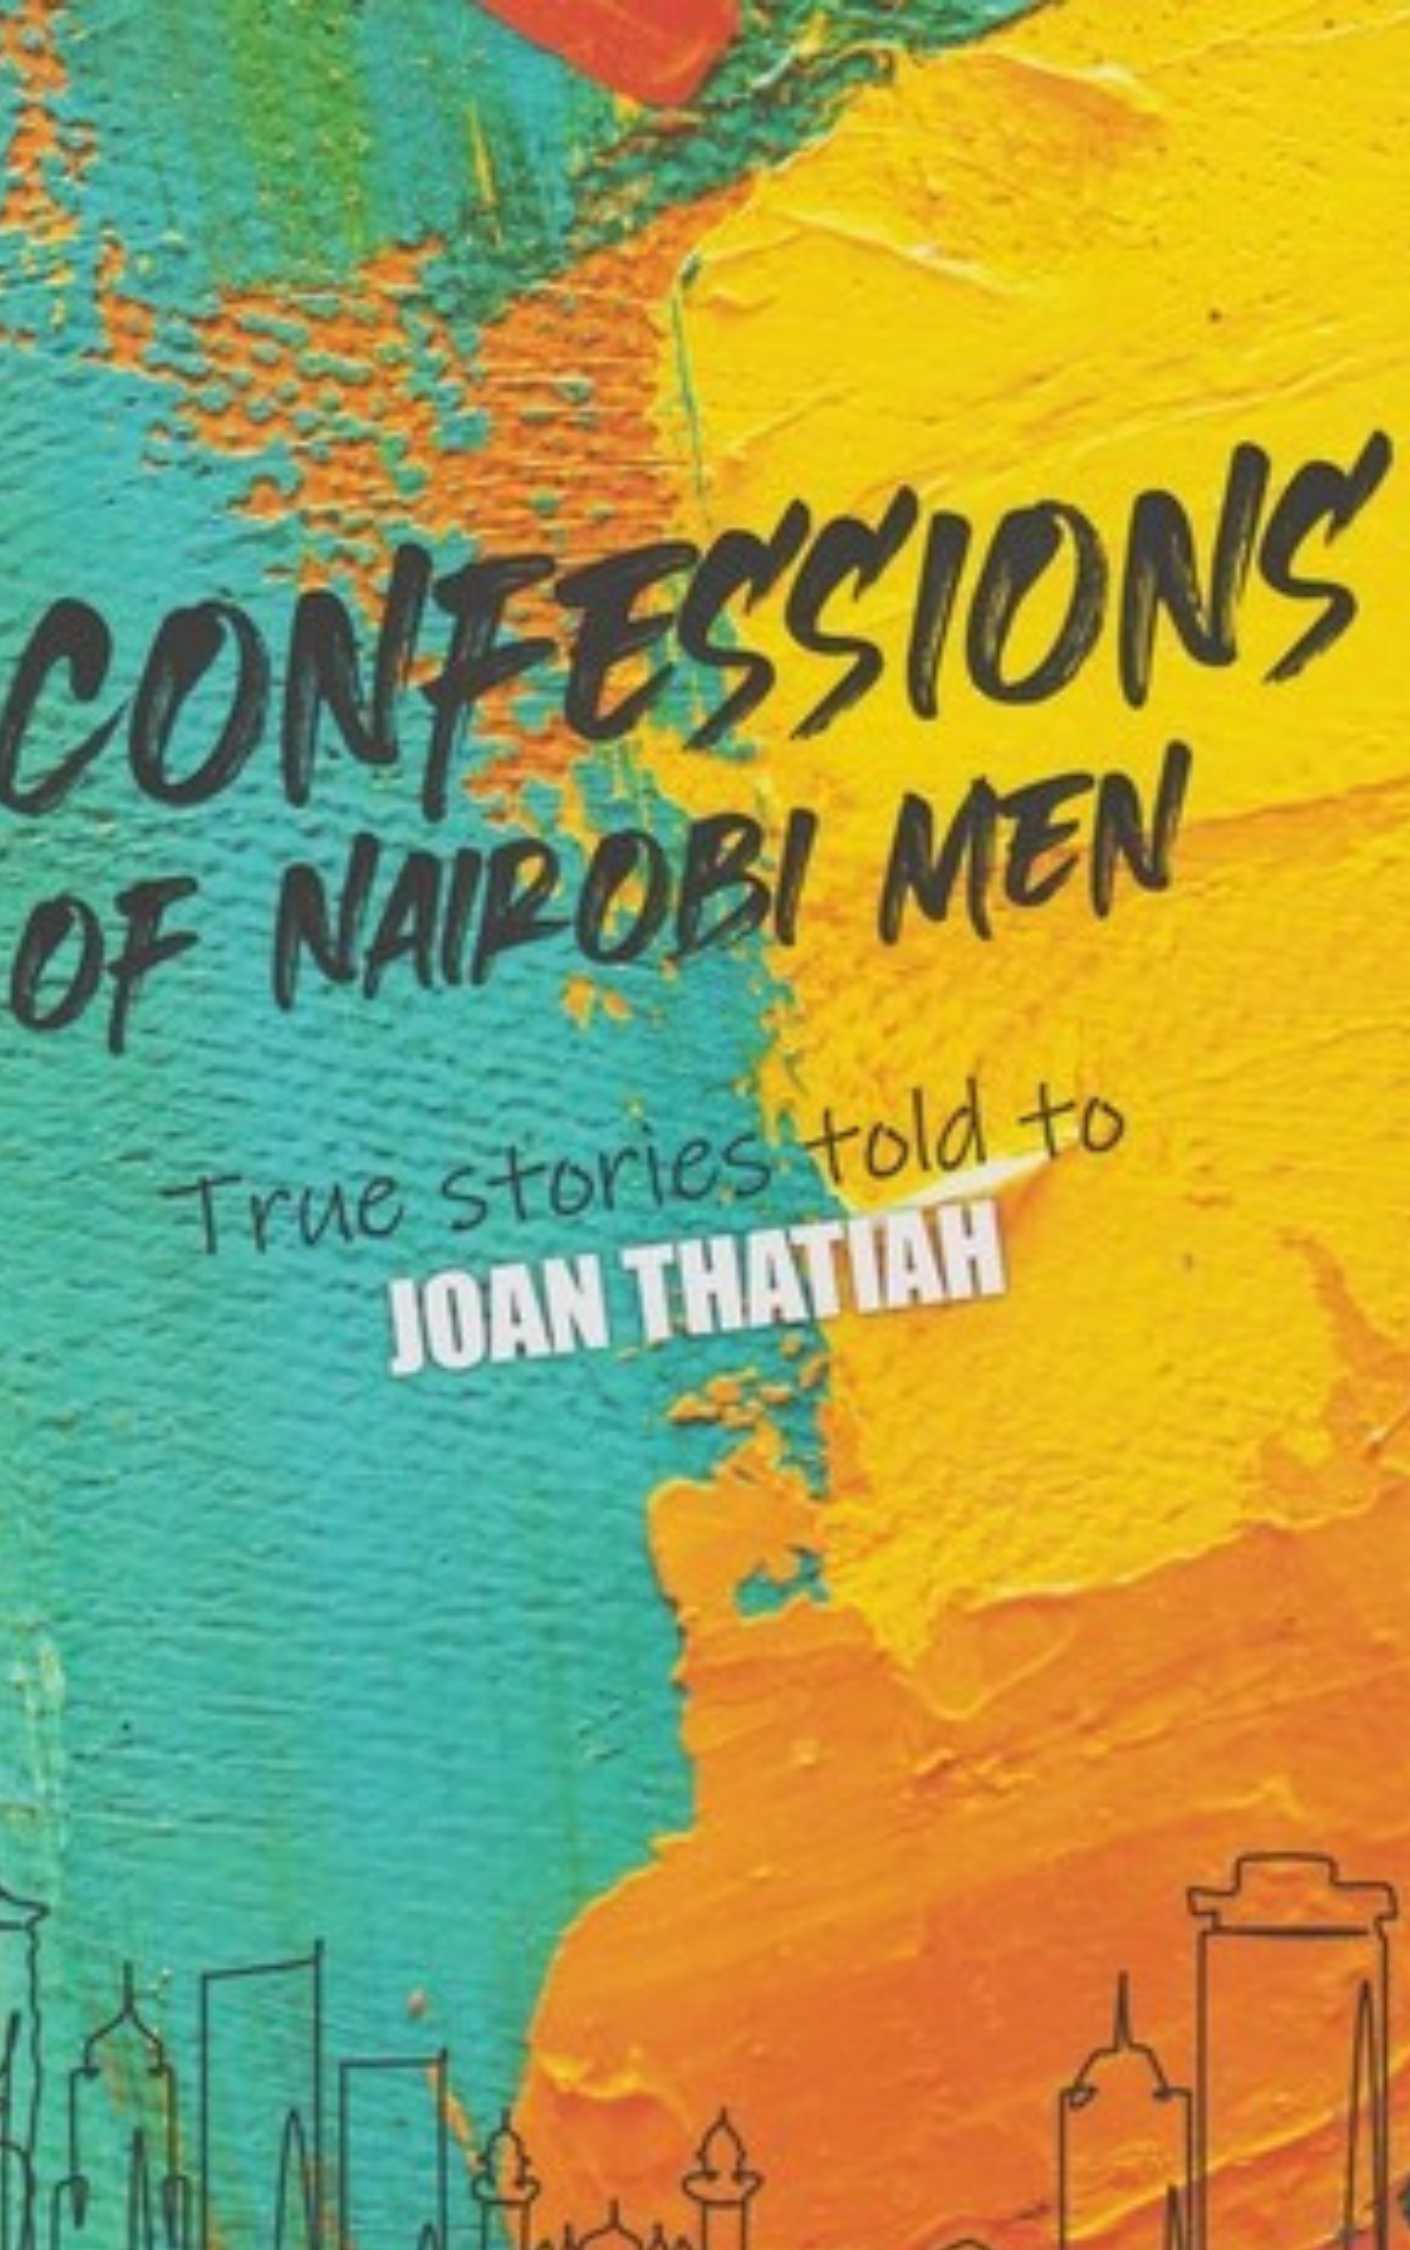 Confessions of Nairobi Men & Women